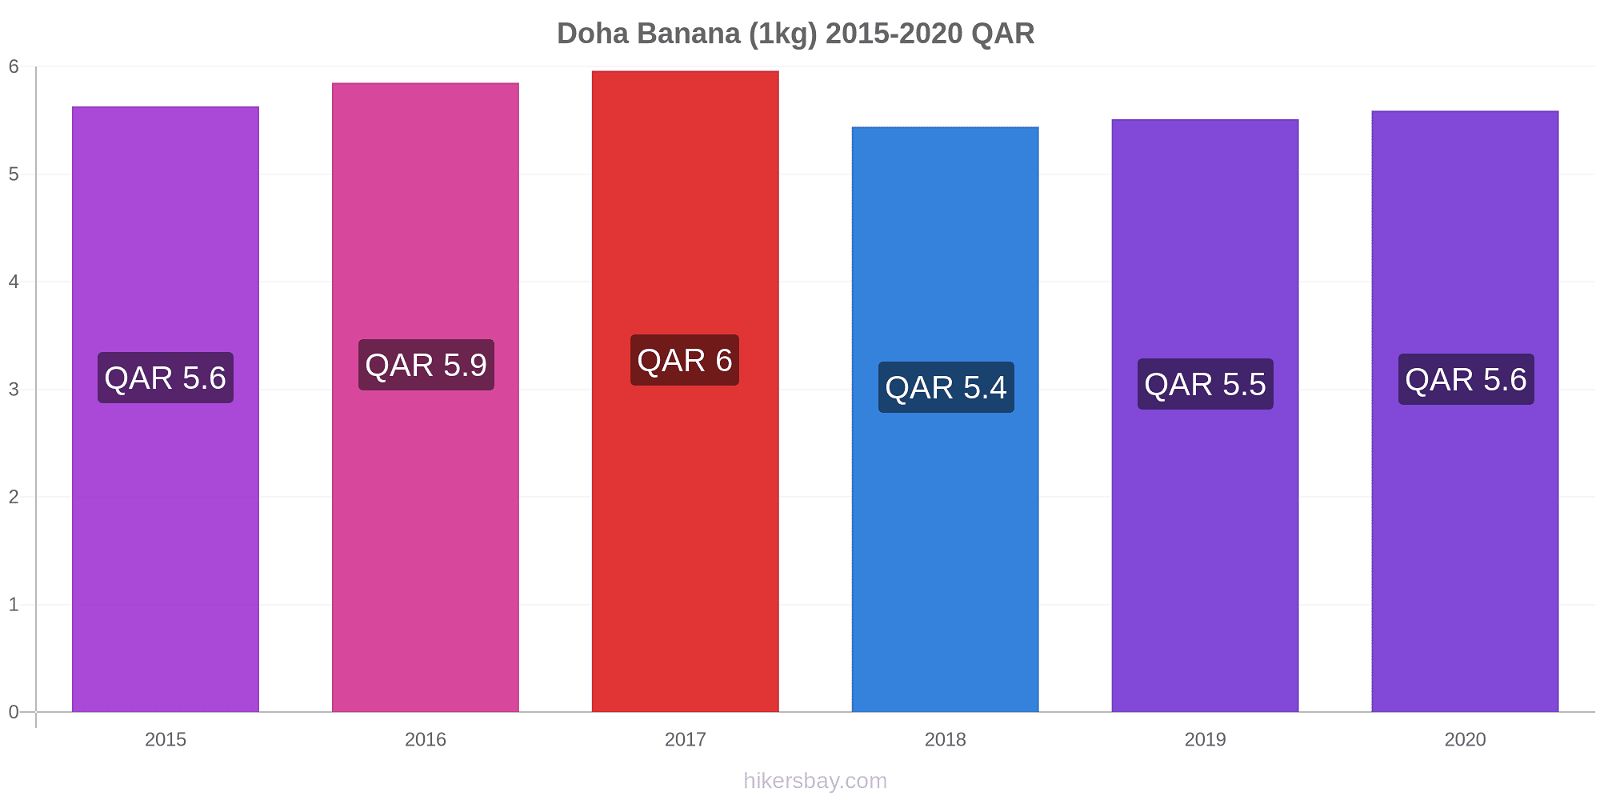 Doha modificări de preț Banana (1kg) hikersbay.com